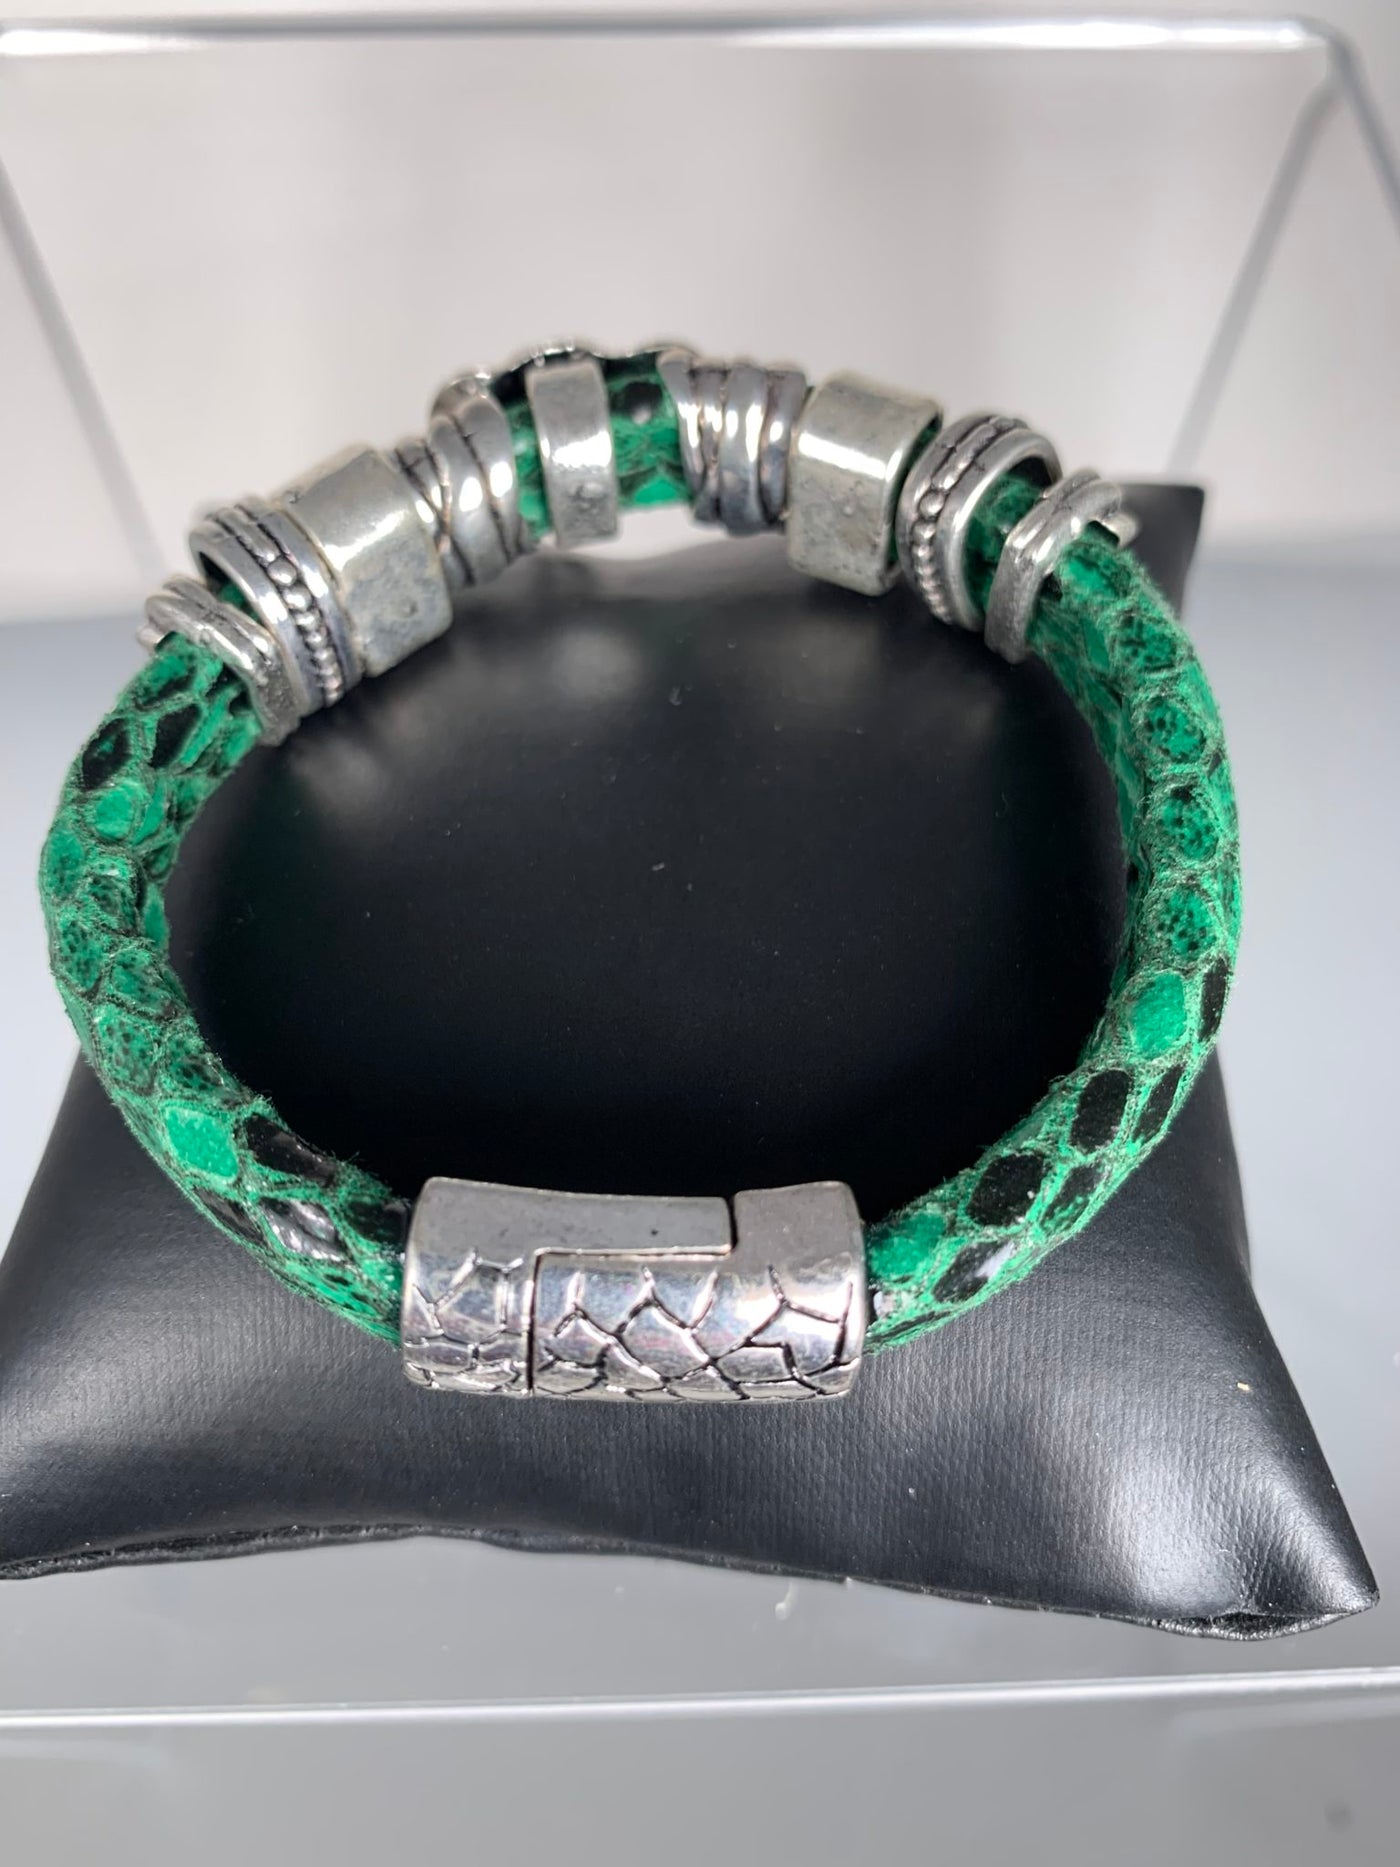 Green Faux Snake Skin Band Bracelet Featuring an Elephant Motif